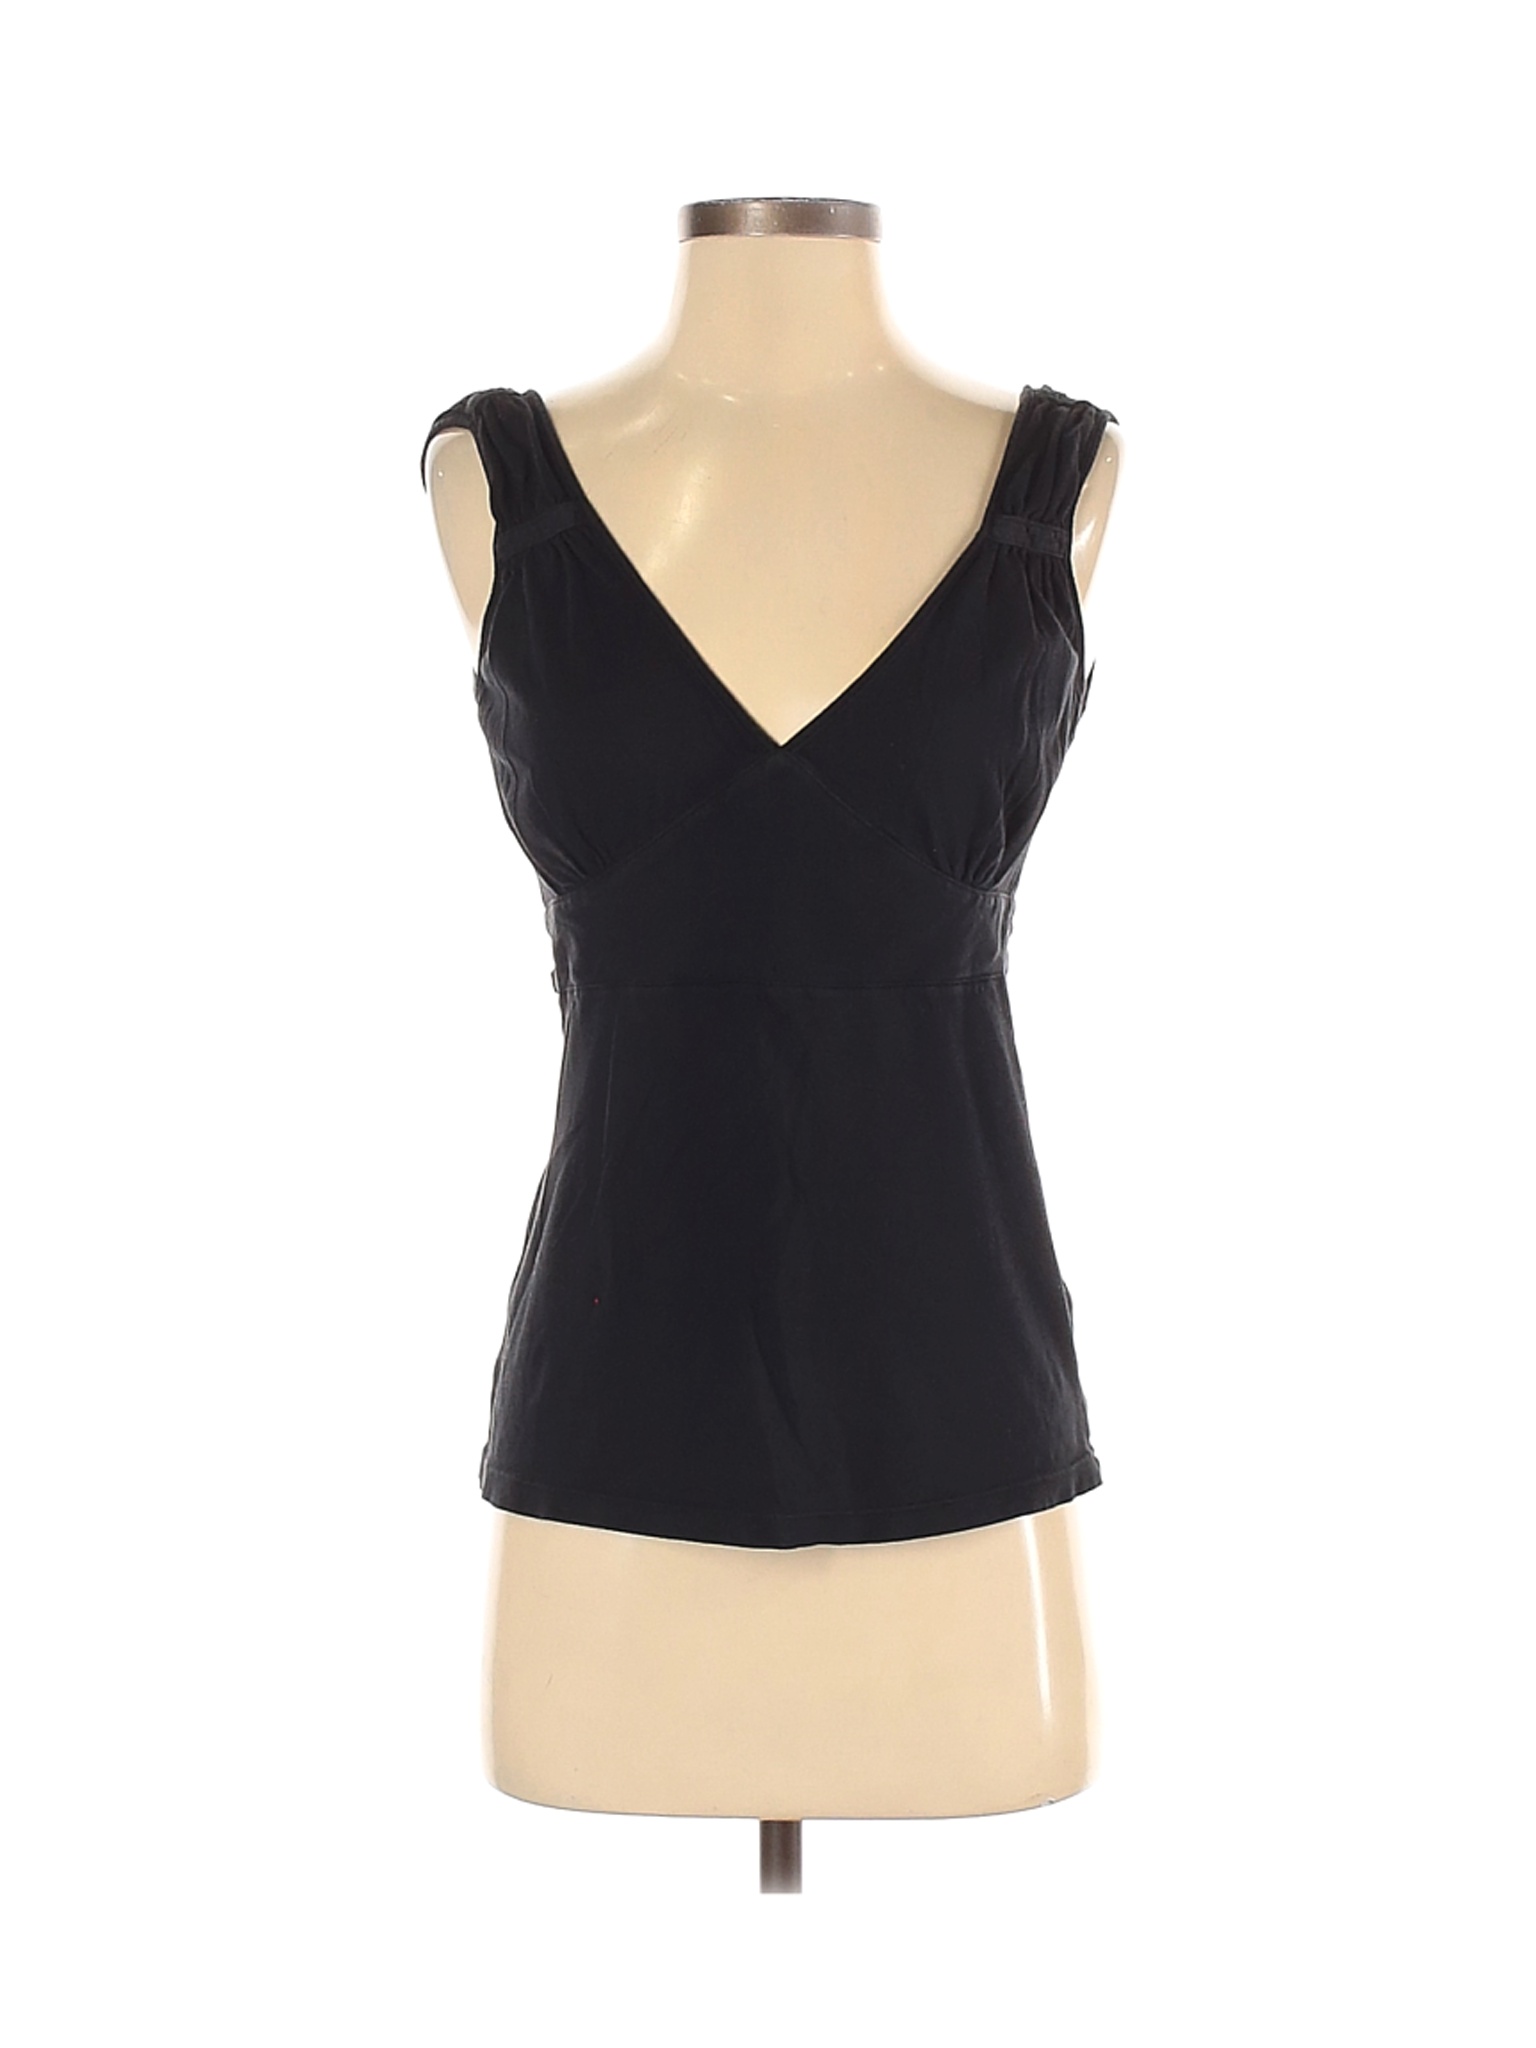 Juicy Couture Women Black Sleeveless Top S | eBay